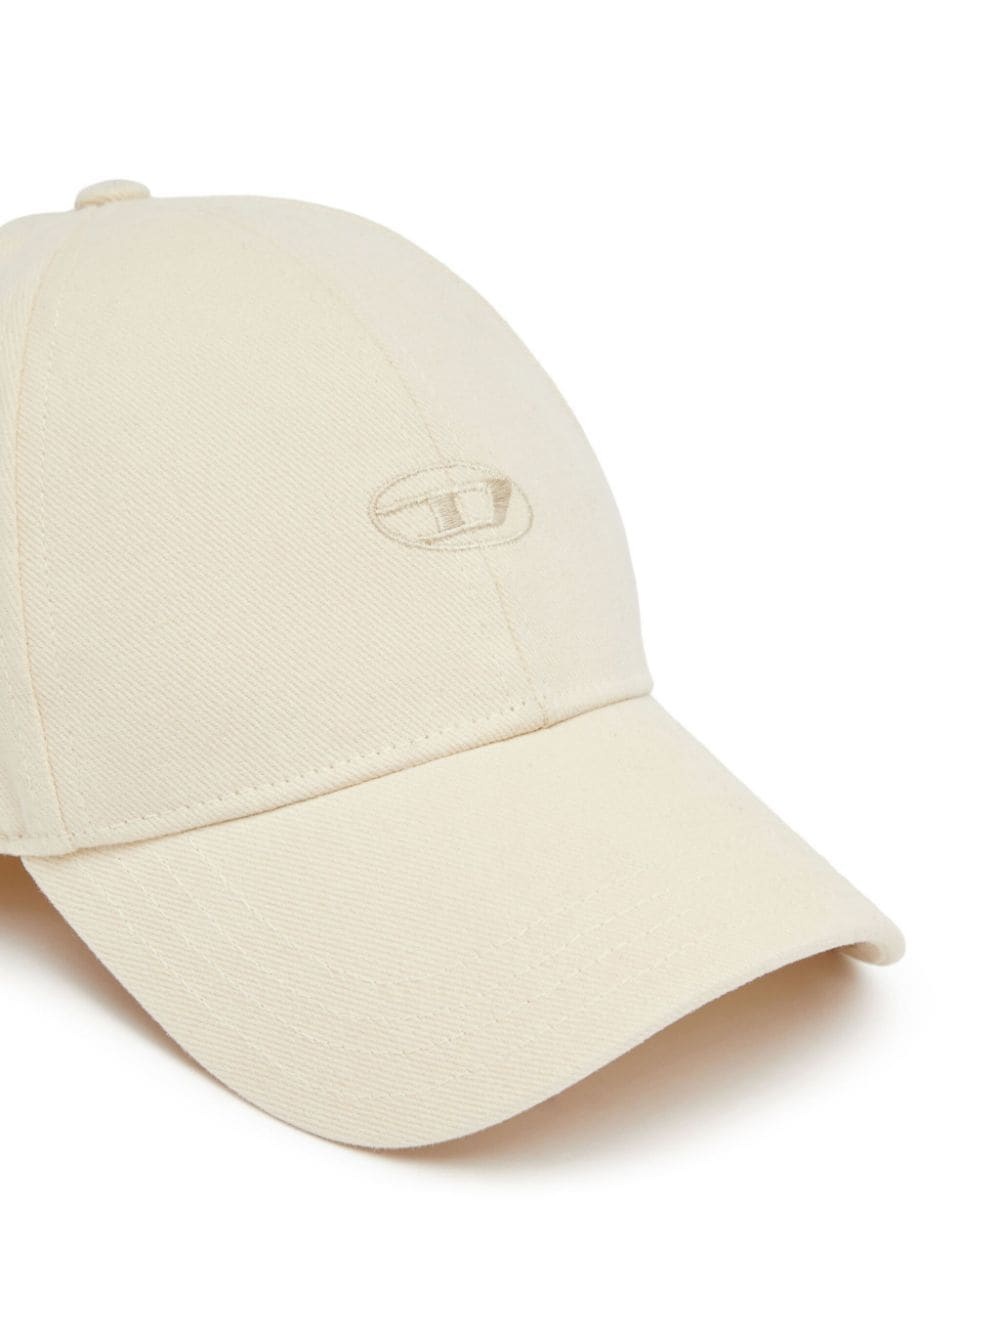 D-embroidery baseball cap - 3